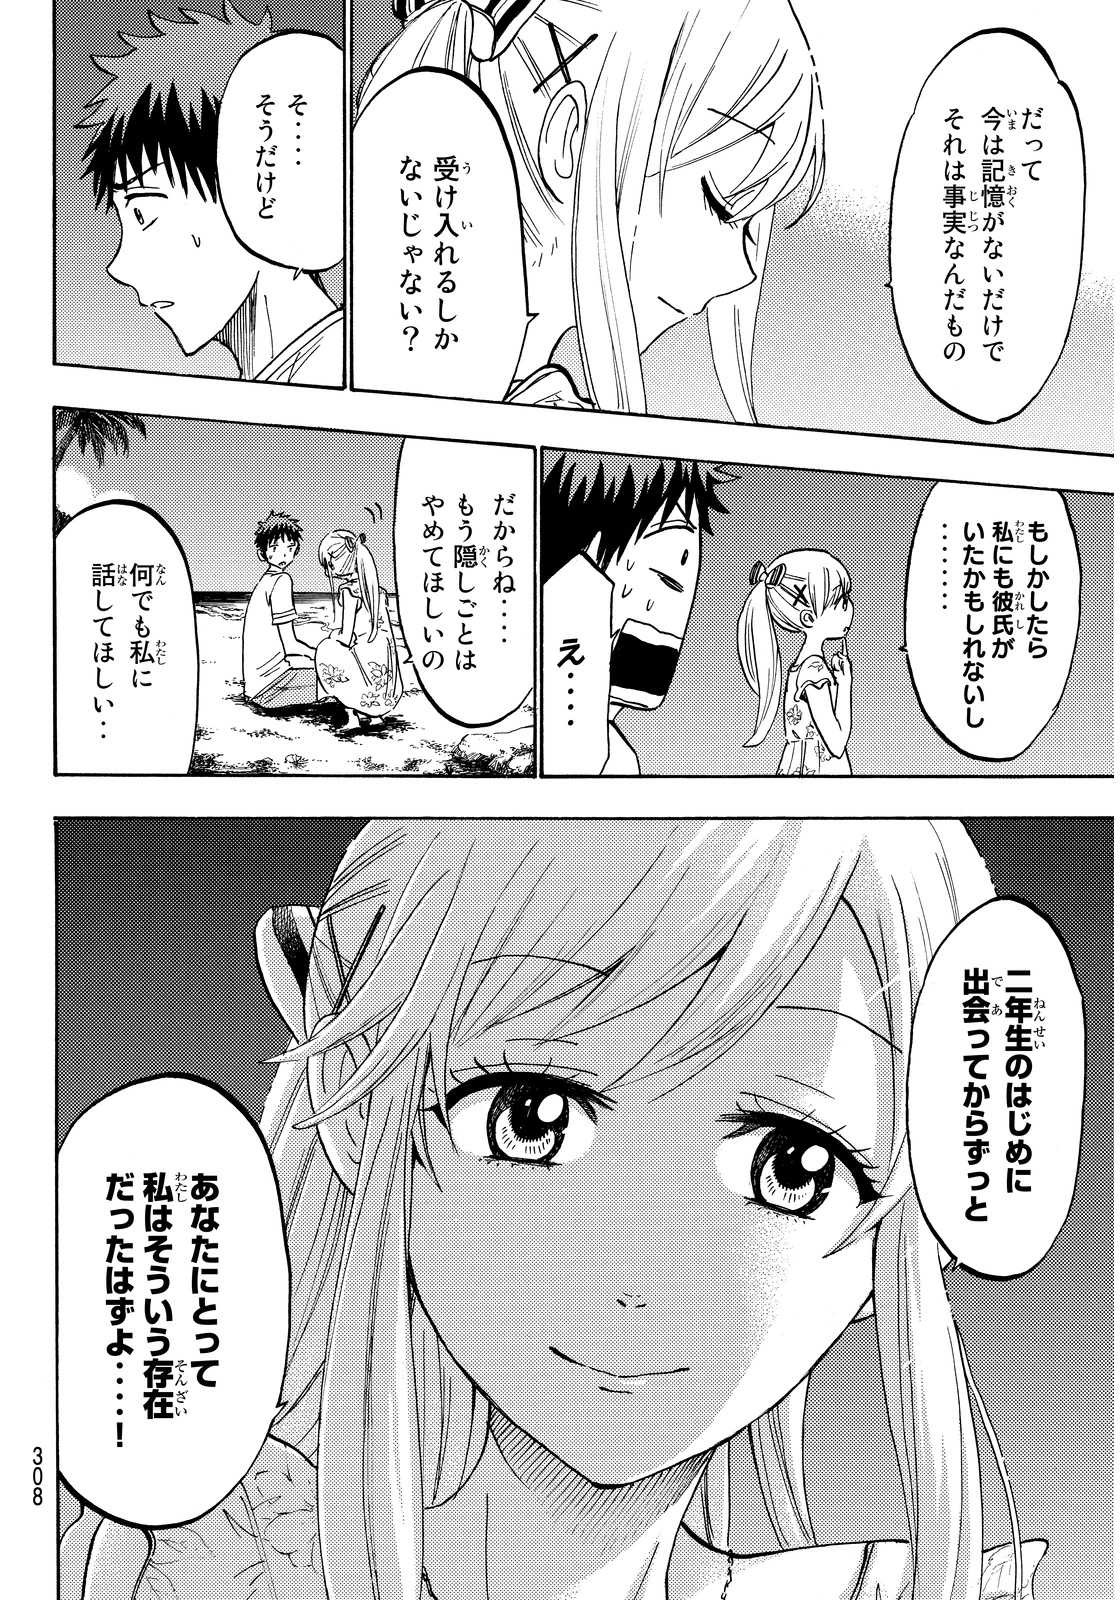 Yamada-kun to 7-nin no Majo - Chapter 203 - Page 18